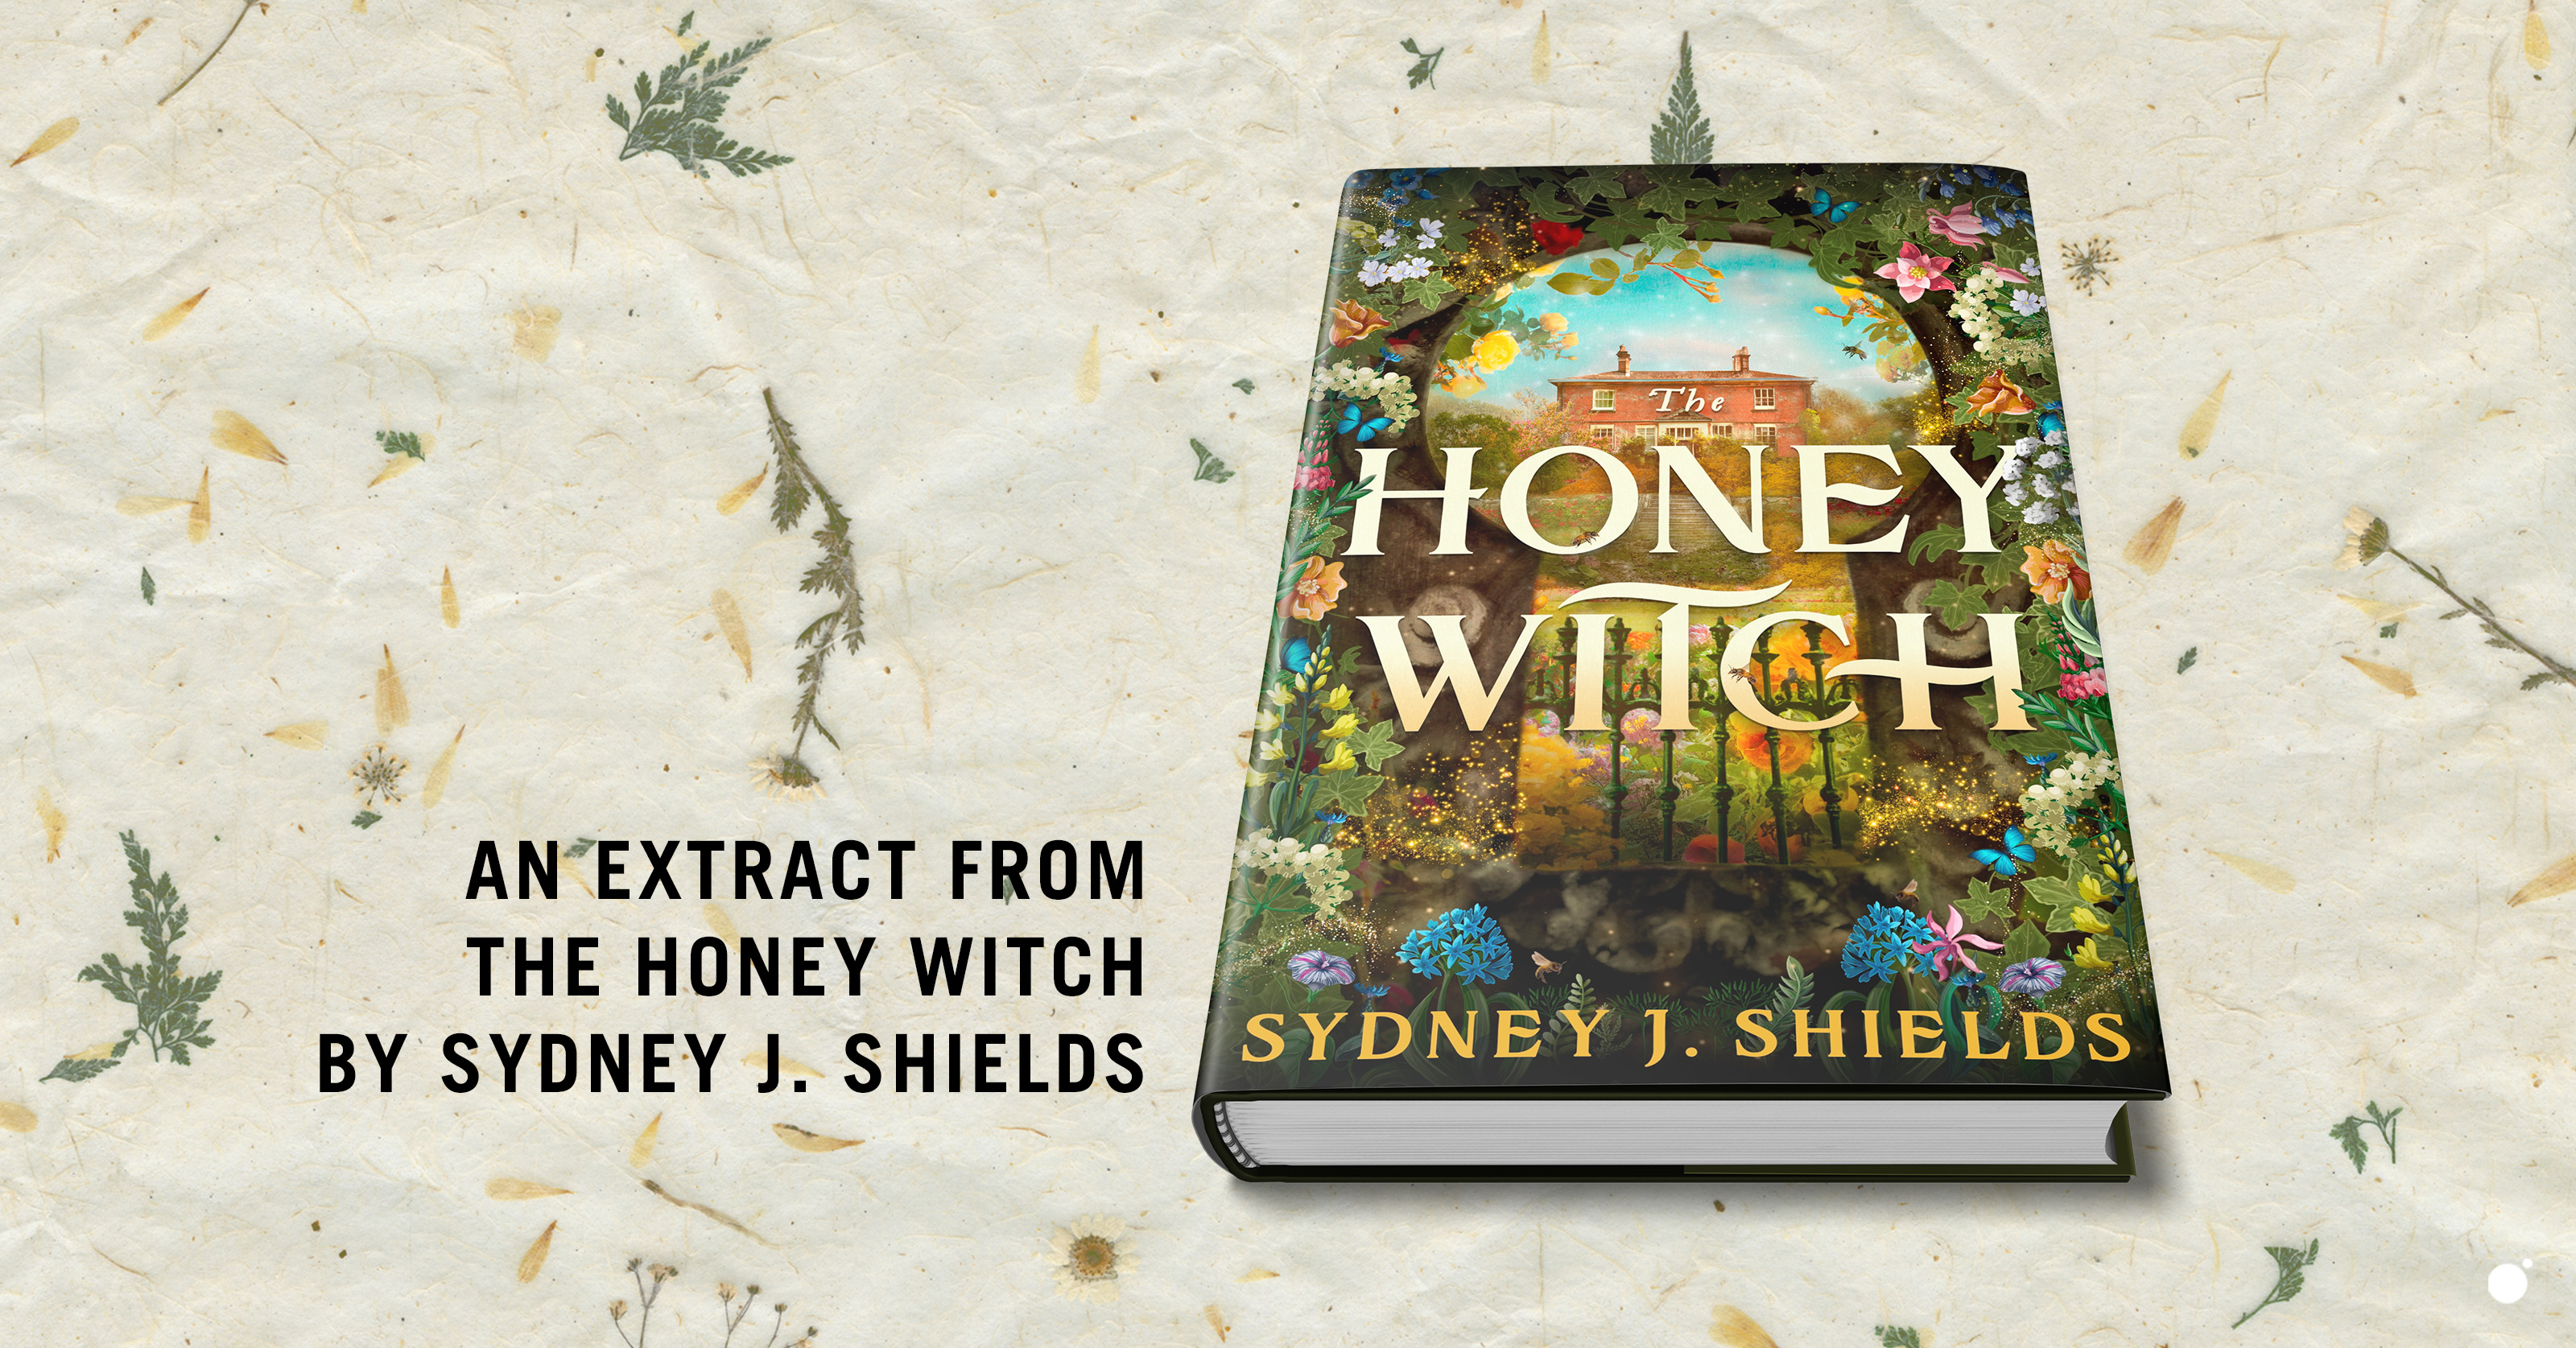 The Honey Witch by Sydney J. Shields